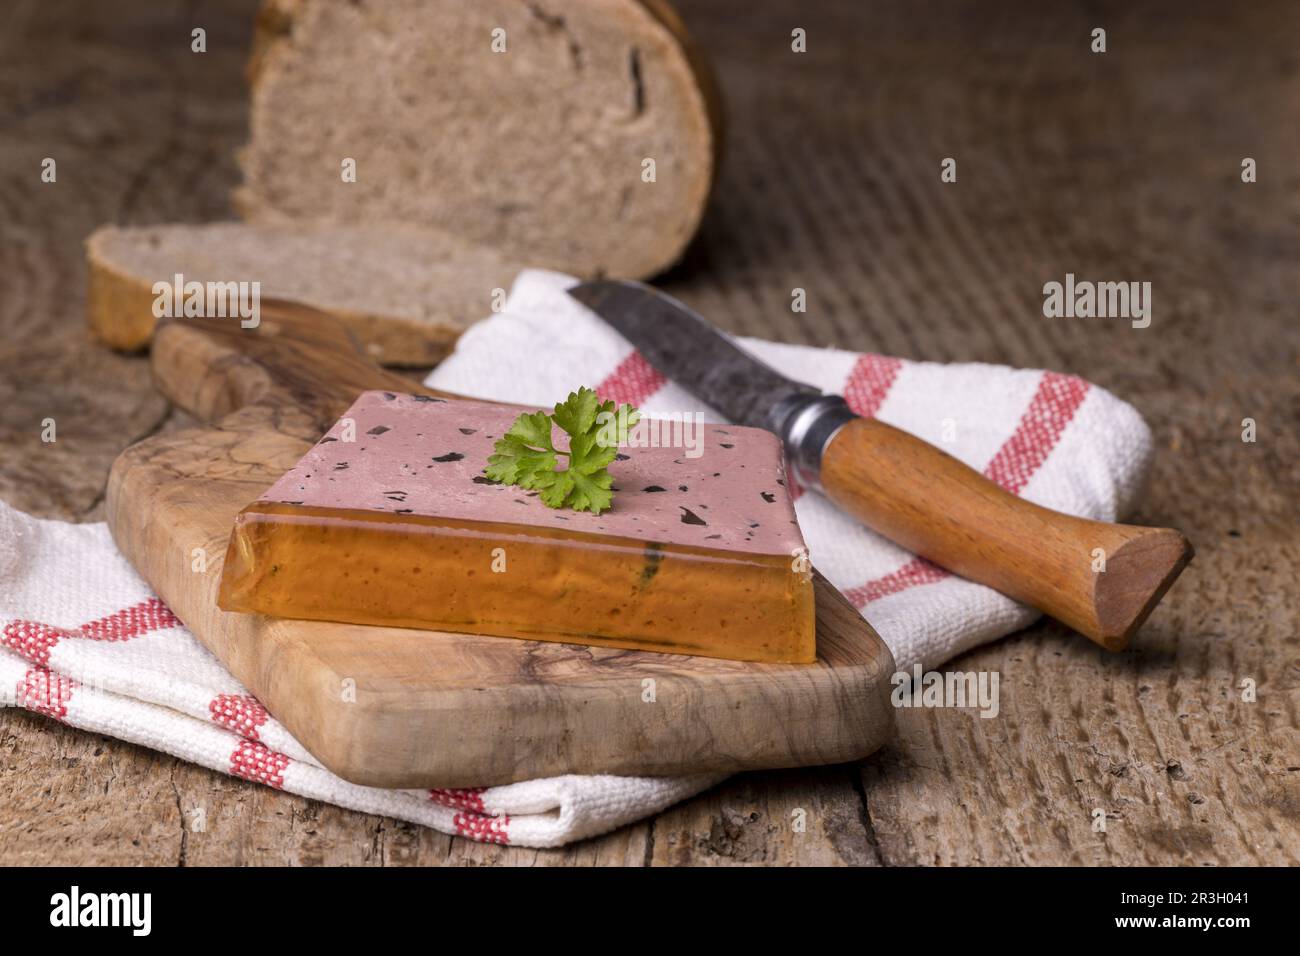 Pate on wood Stock Photo